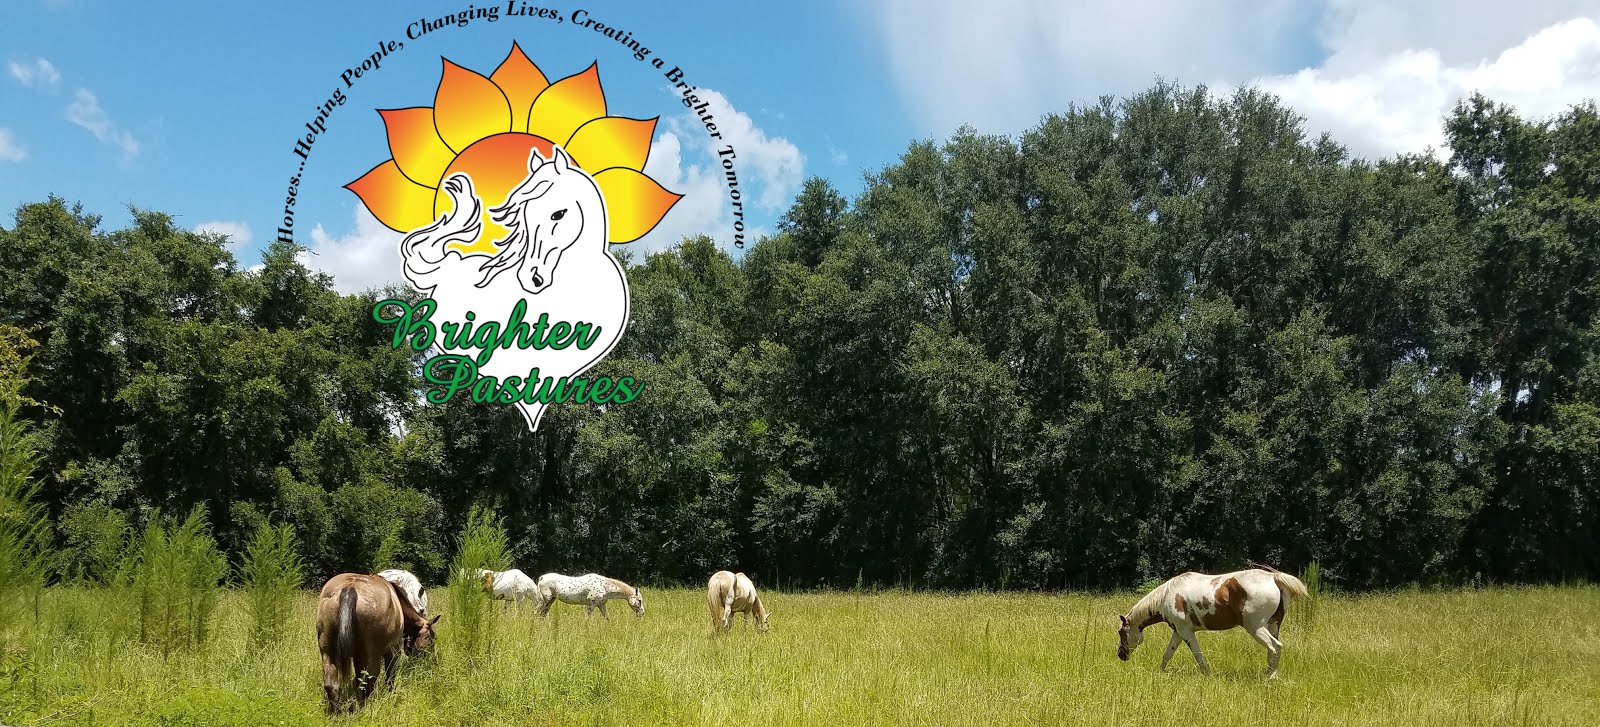 Brighter Pastures